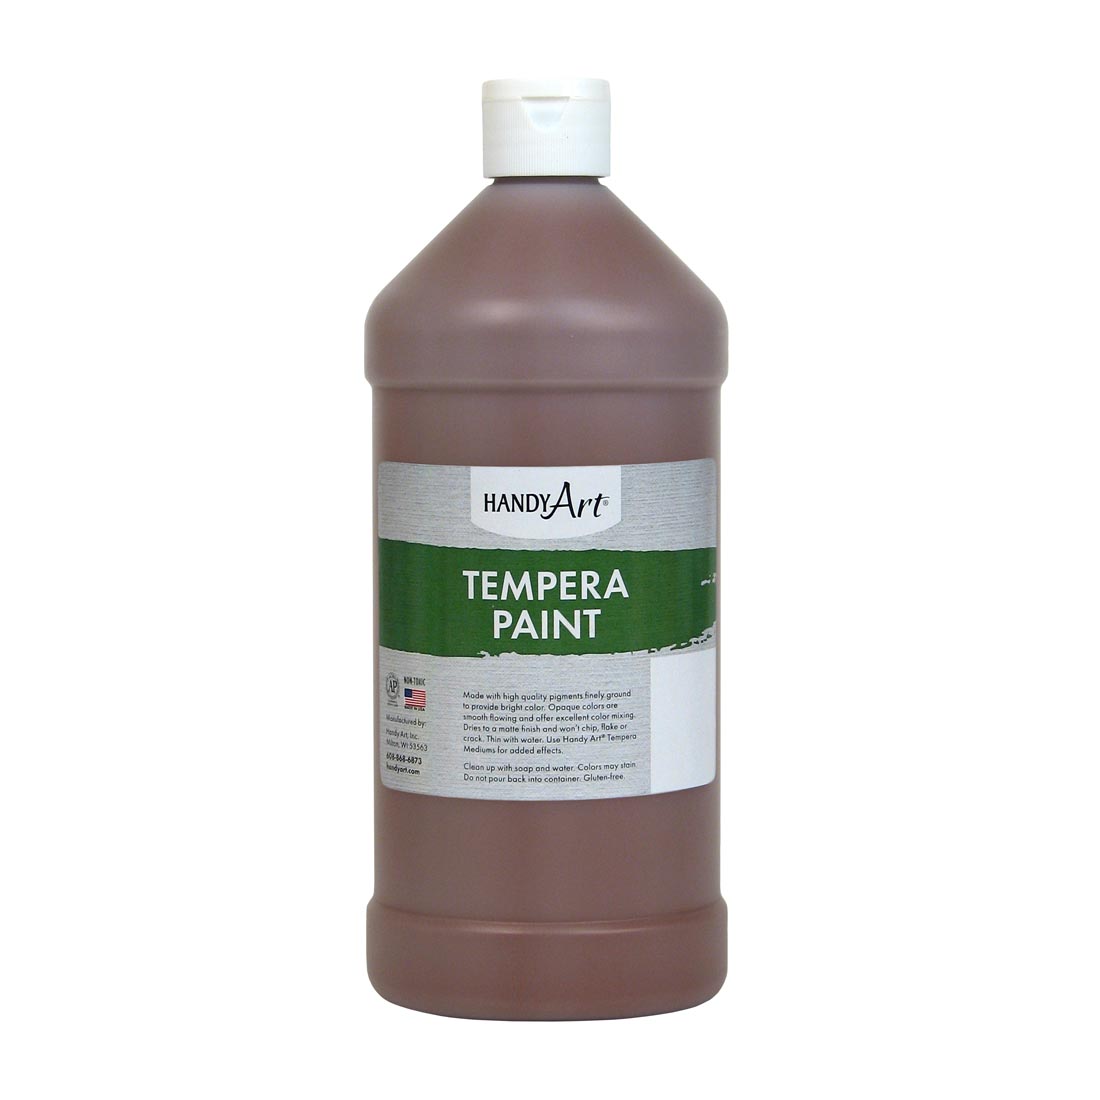 Quart bottle of Brown Handy Art Tempera Paint